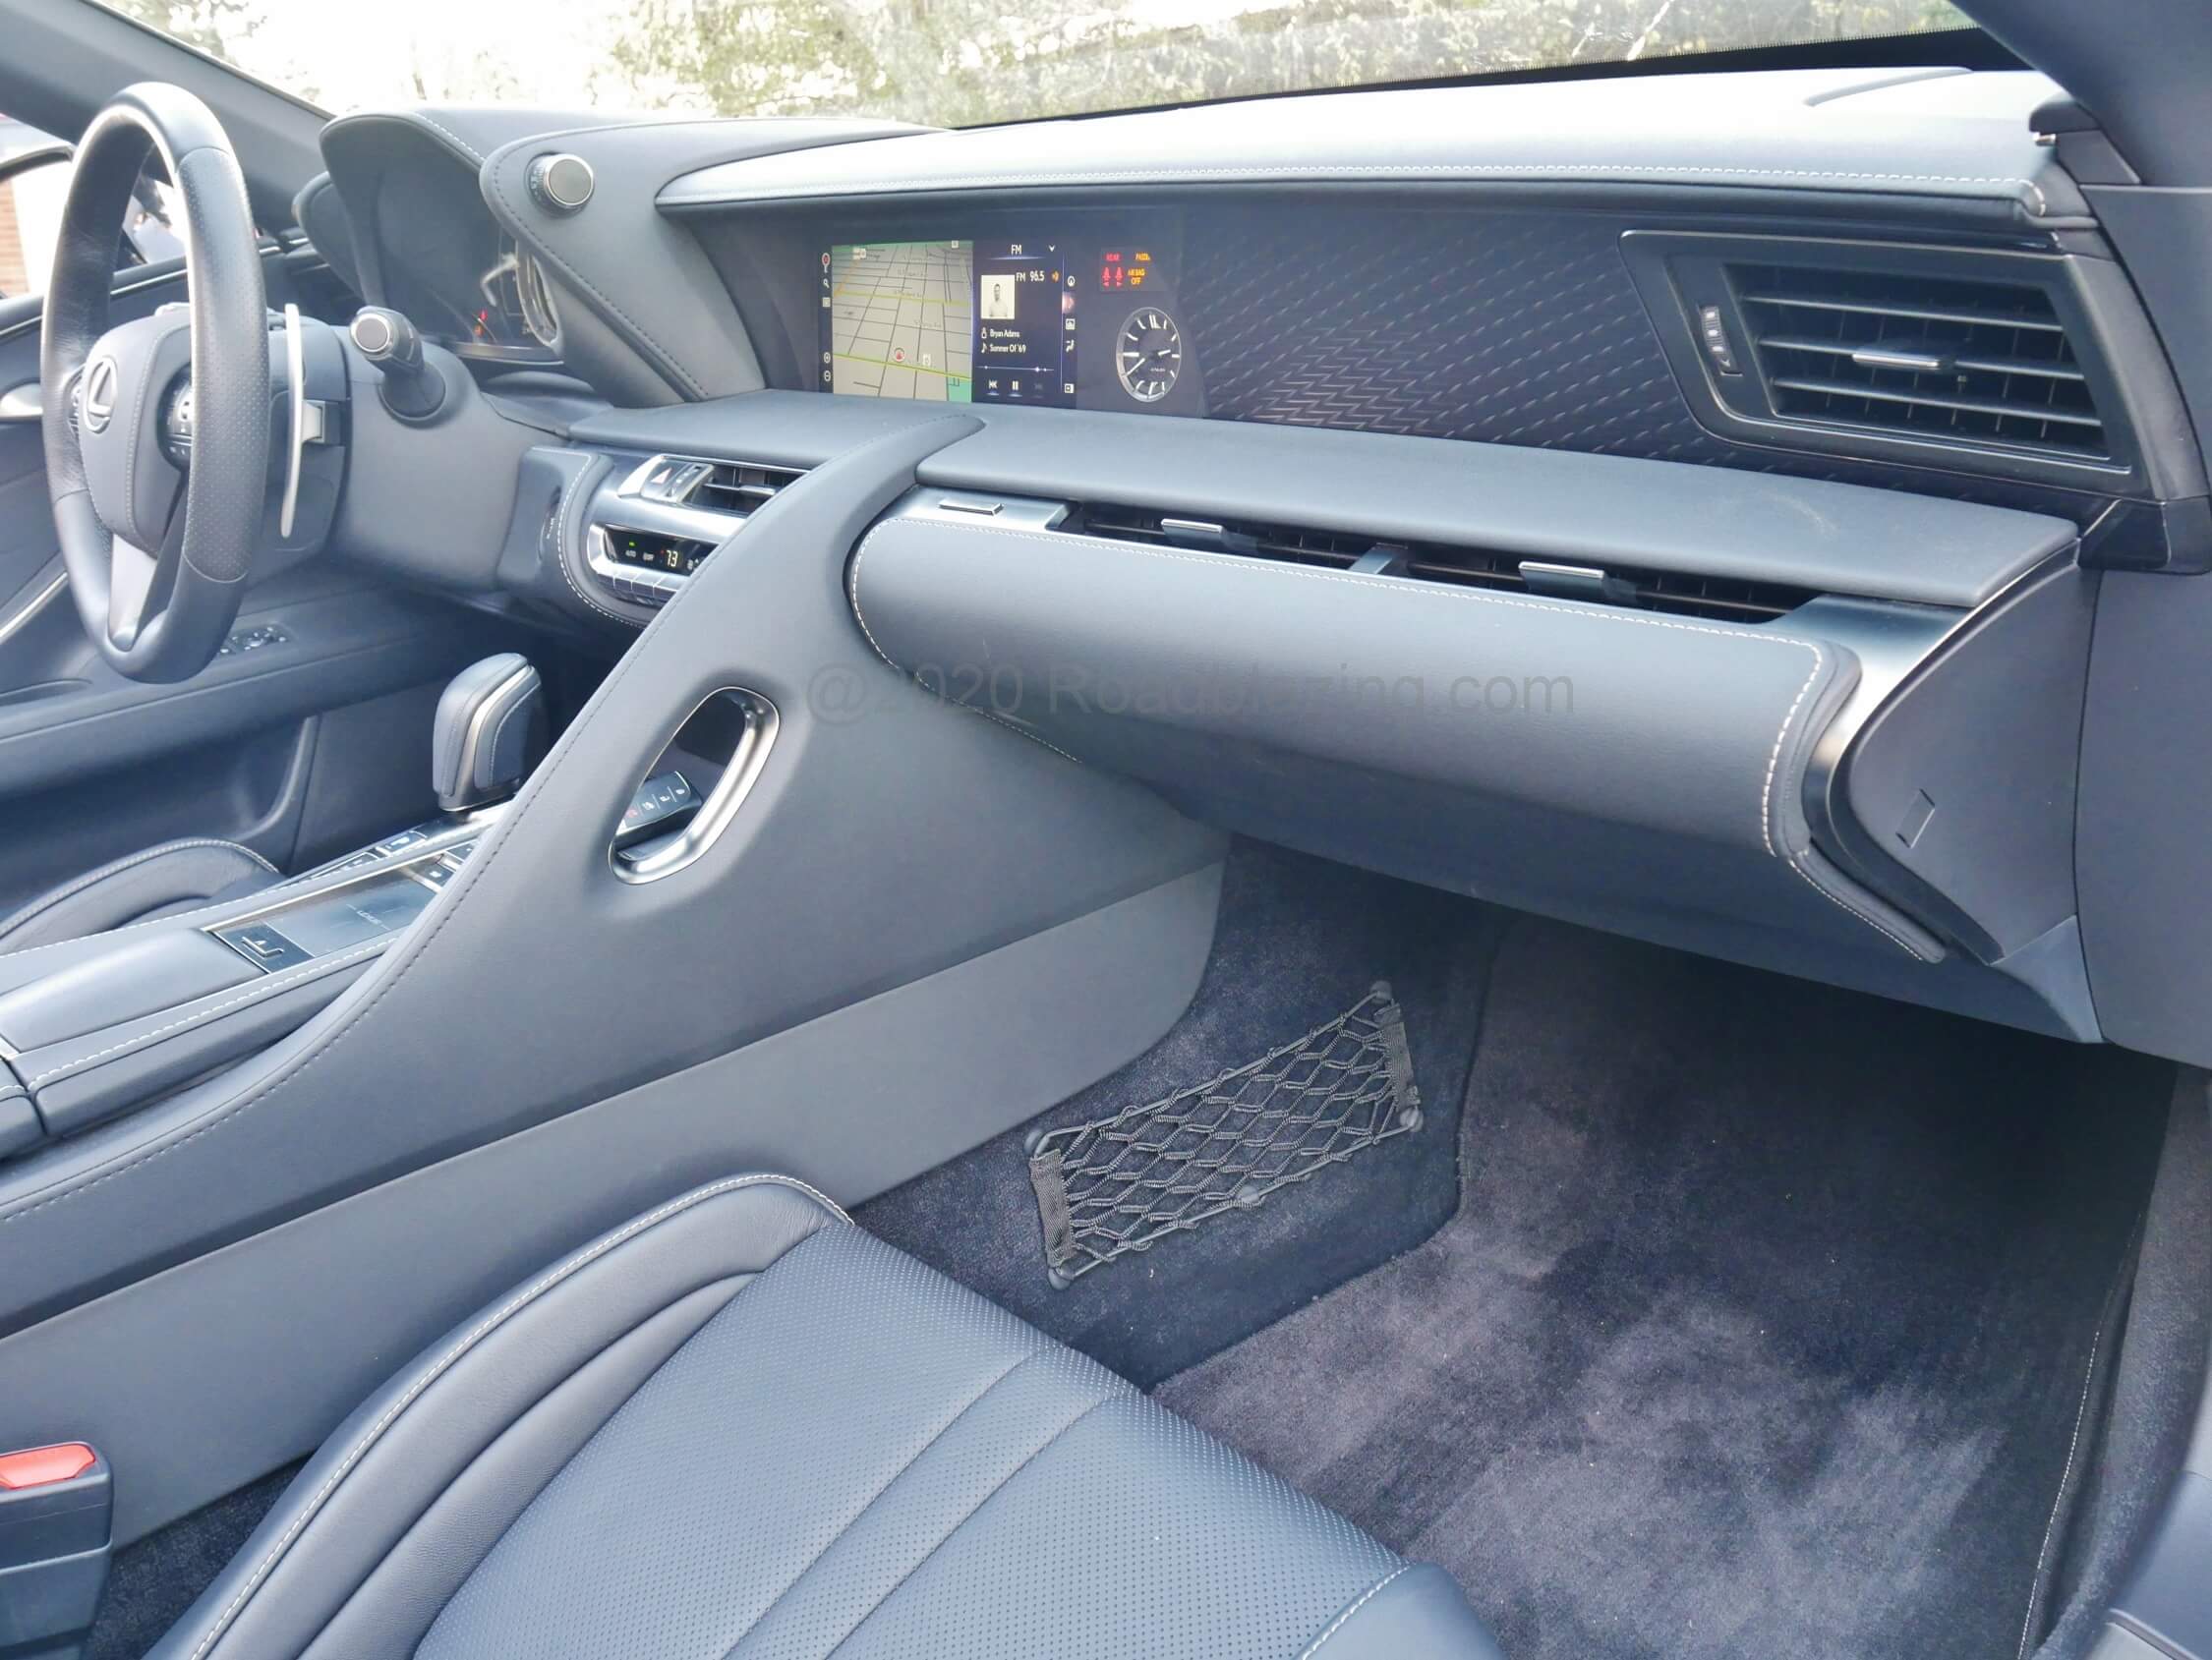 2021 Lexus LC 500 Convertible: grab handles and illuminated carbon fiber dash weave greet front passenger